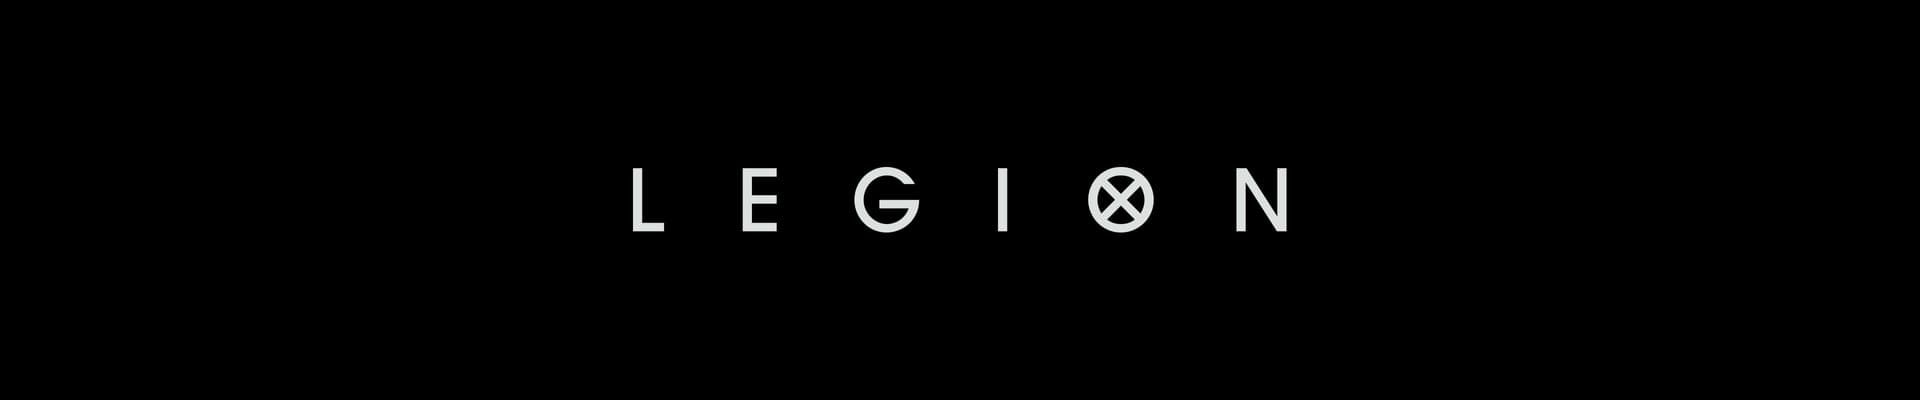 Legion TV Show Logo On Black